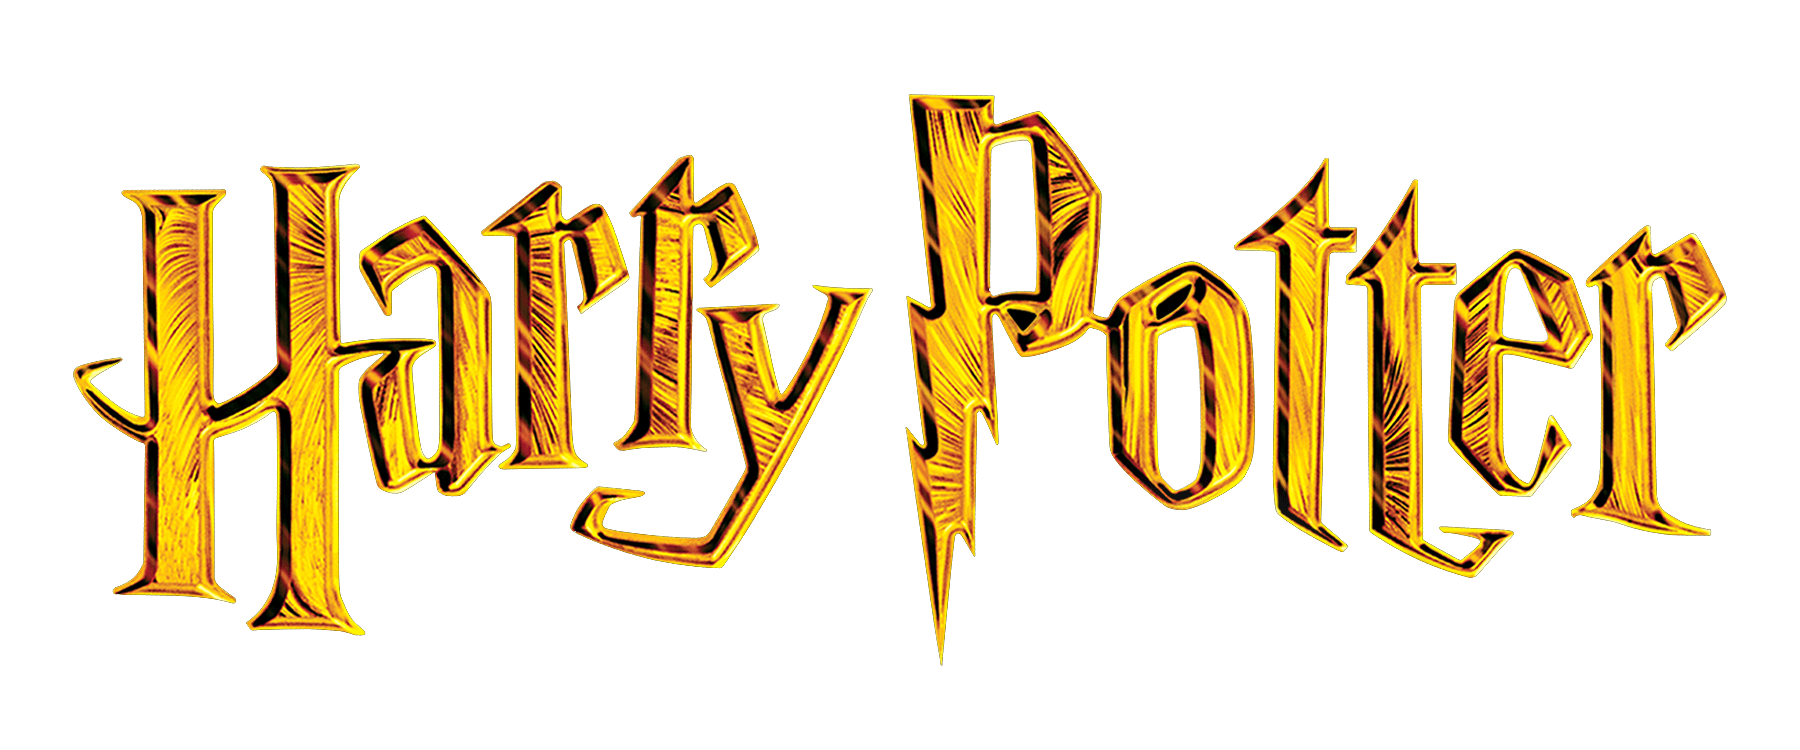 Pop! Deluxe - Harry Potter - Albus Dumbledore With Hog's Head Inn - #154 - Hobby Champion Inc